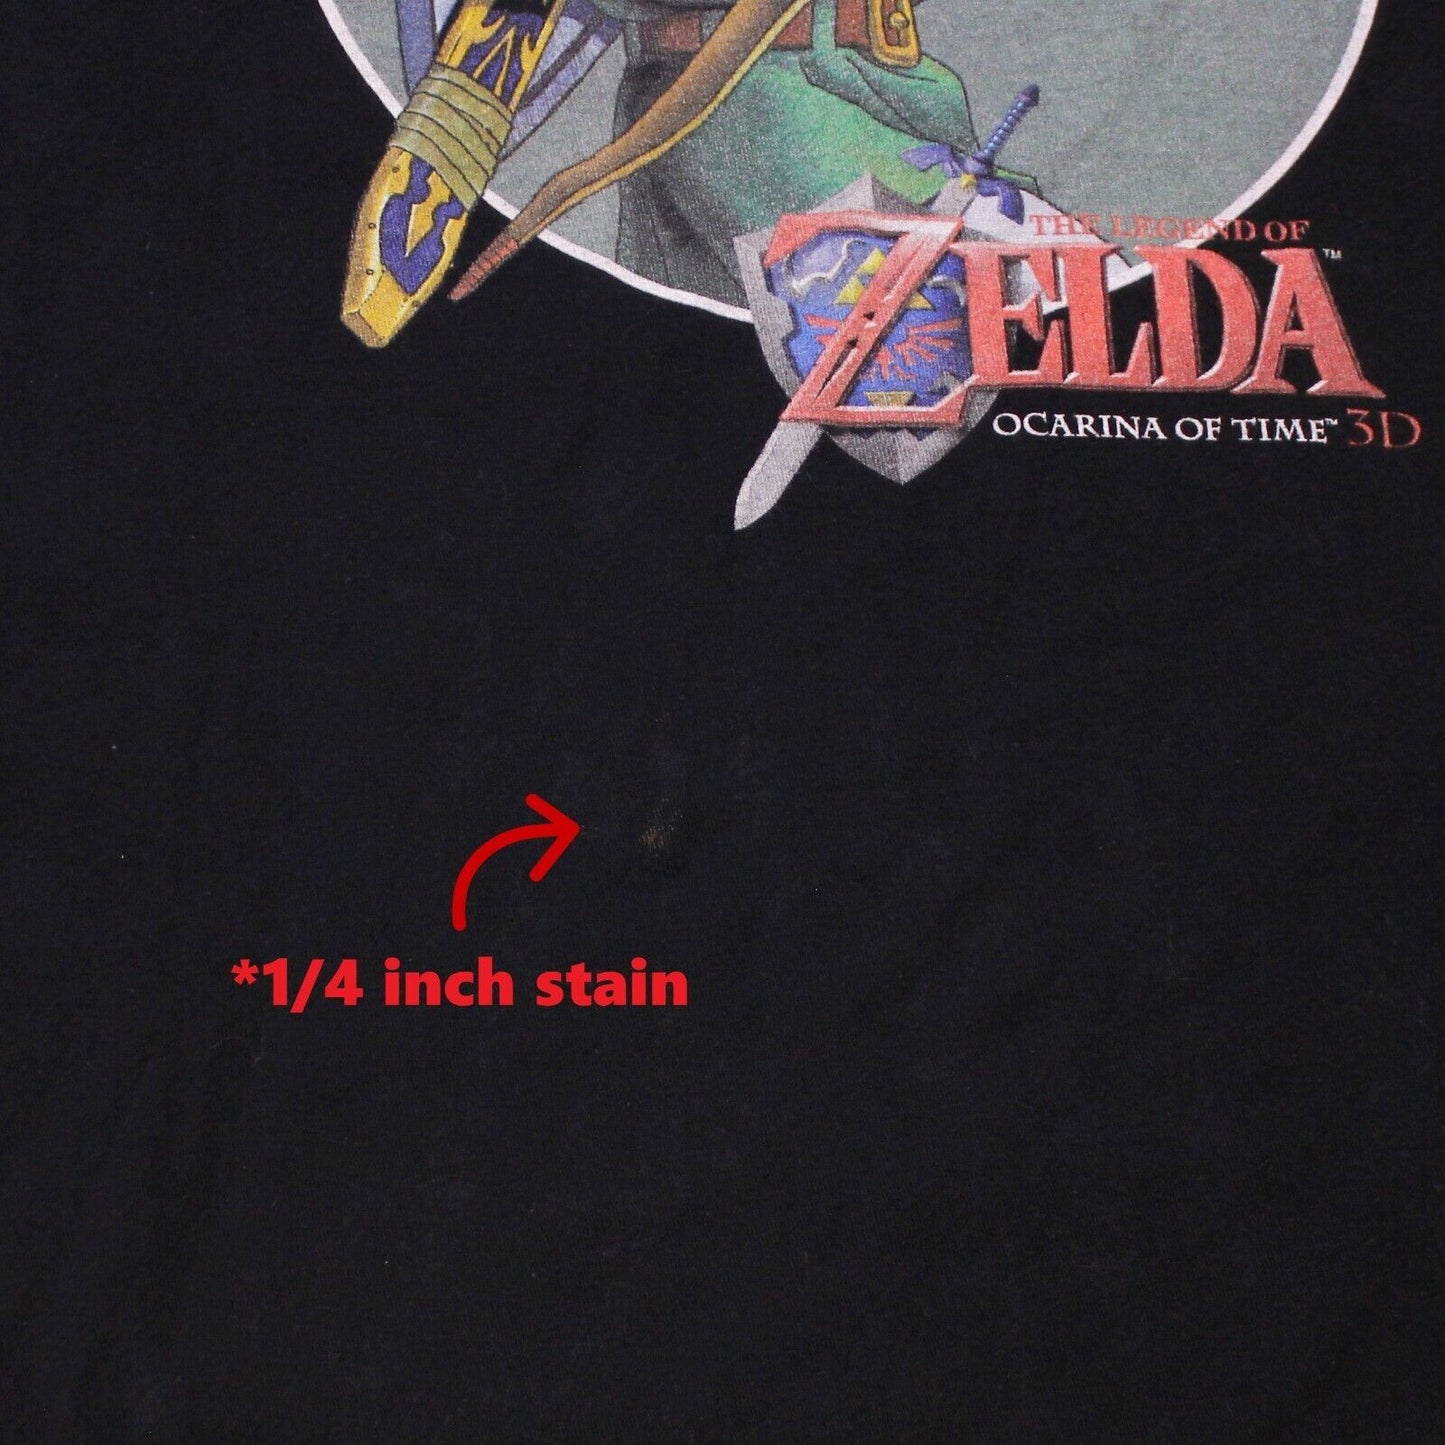 The Legend of Zelda Ocarina of Time 3D Official Nintendo T-Shirt - Men's Medium